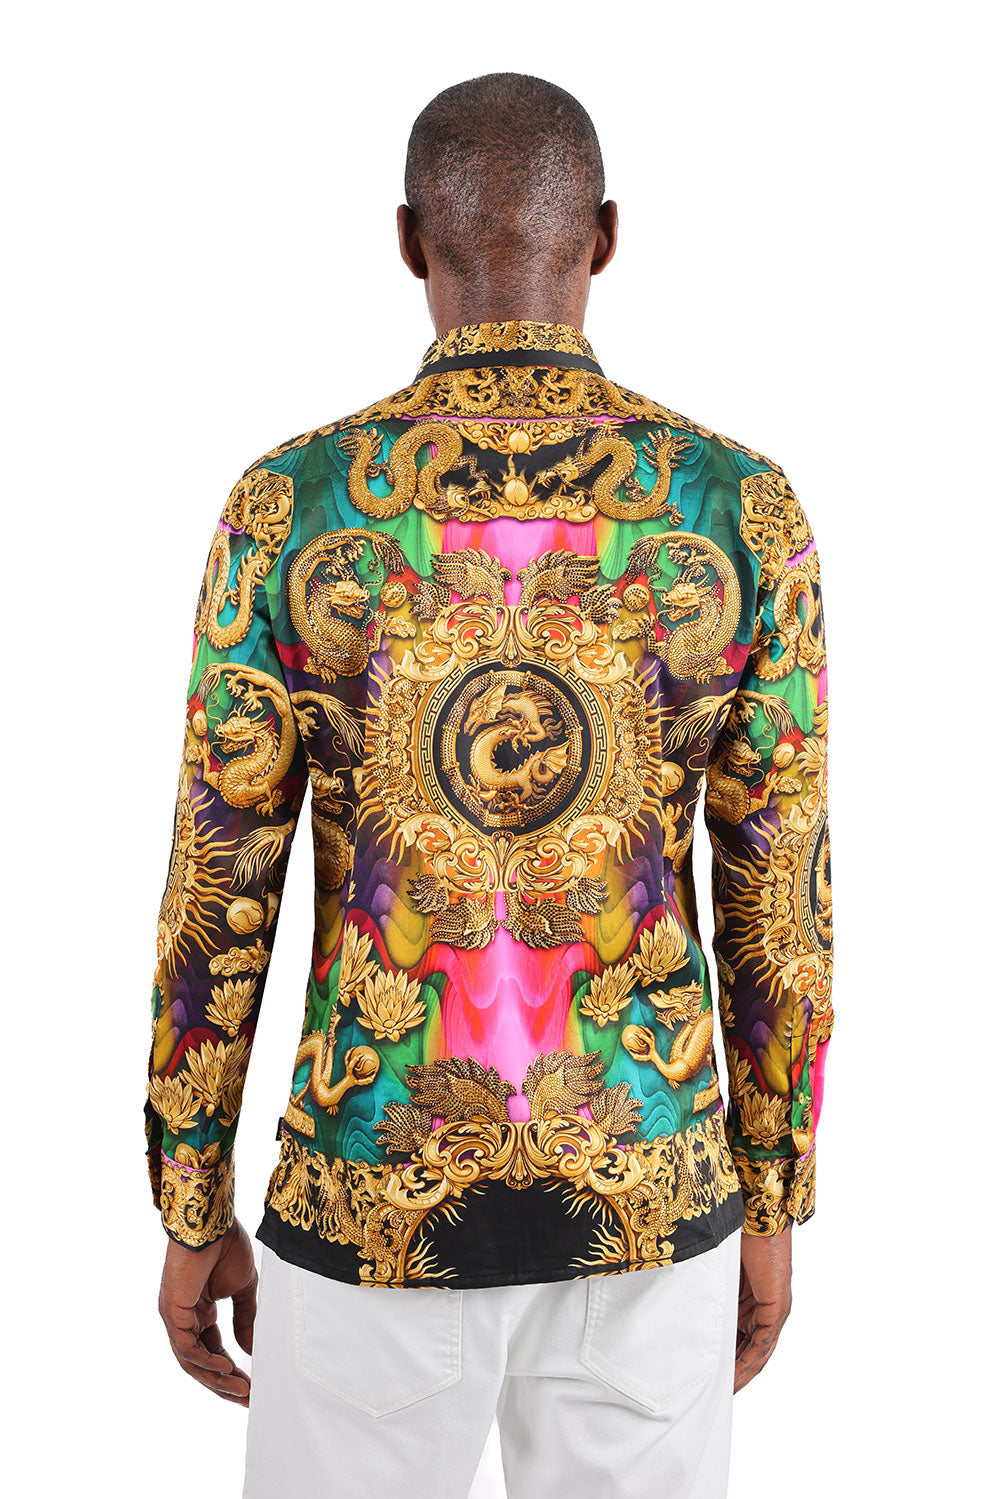 BARABAS Men's Floral Dragon Rhinestone Long Sleeve Shirts 3SPR405 Gold